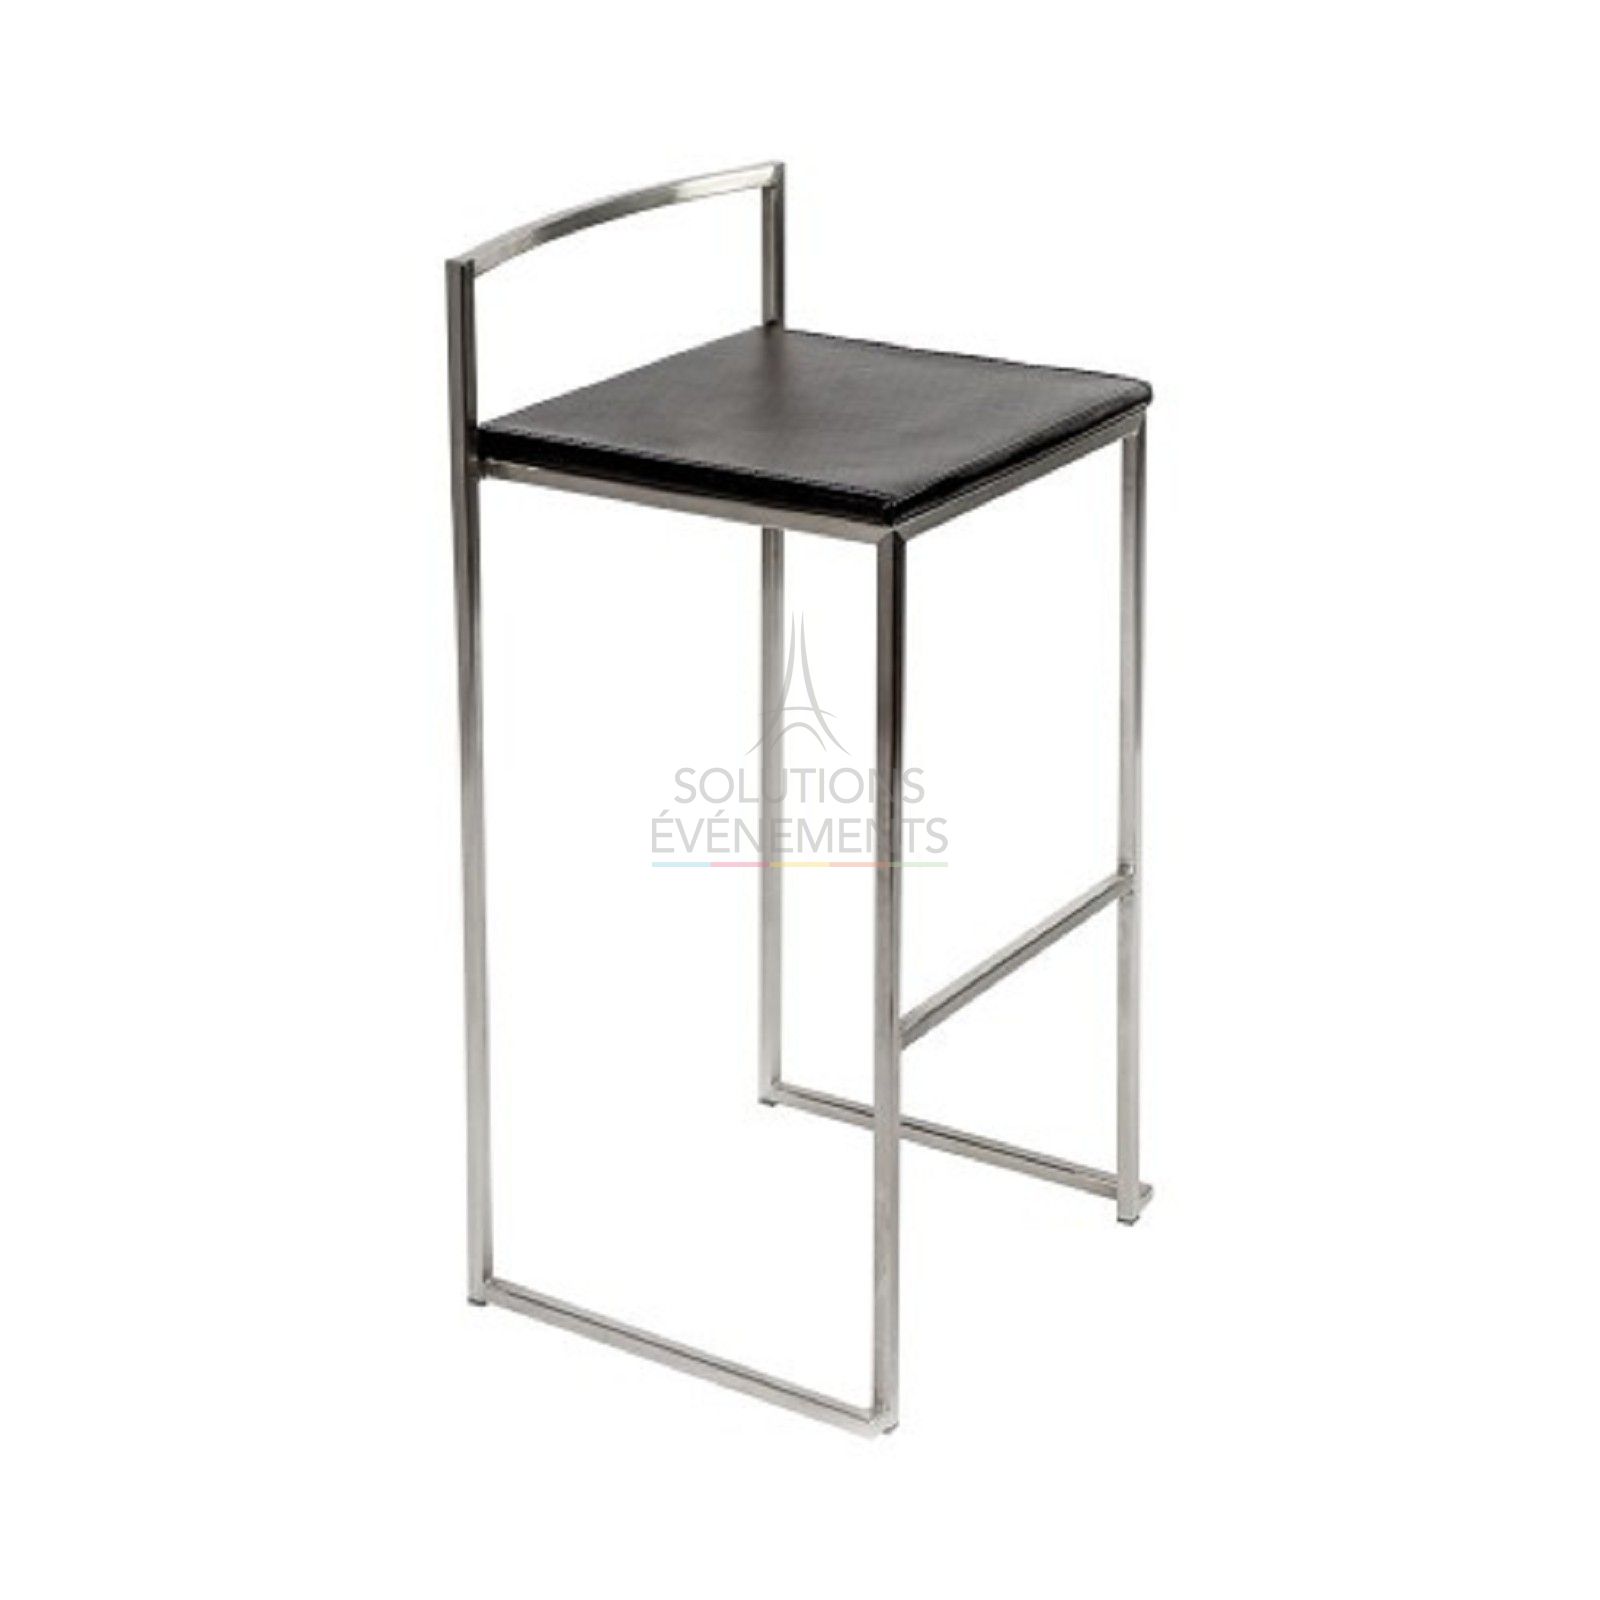 Rental of designer stool for bar